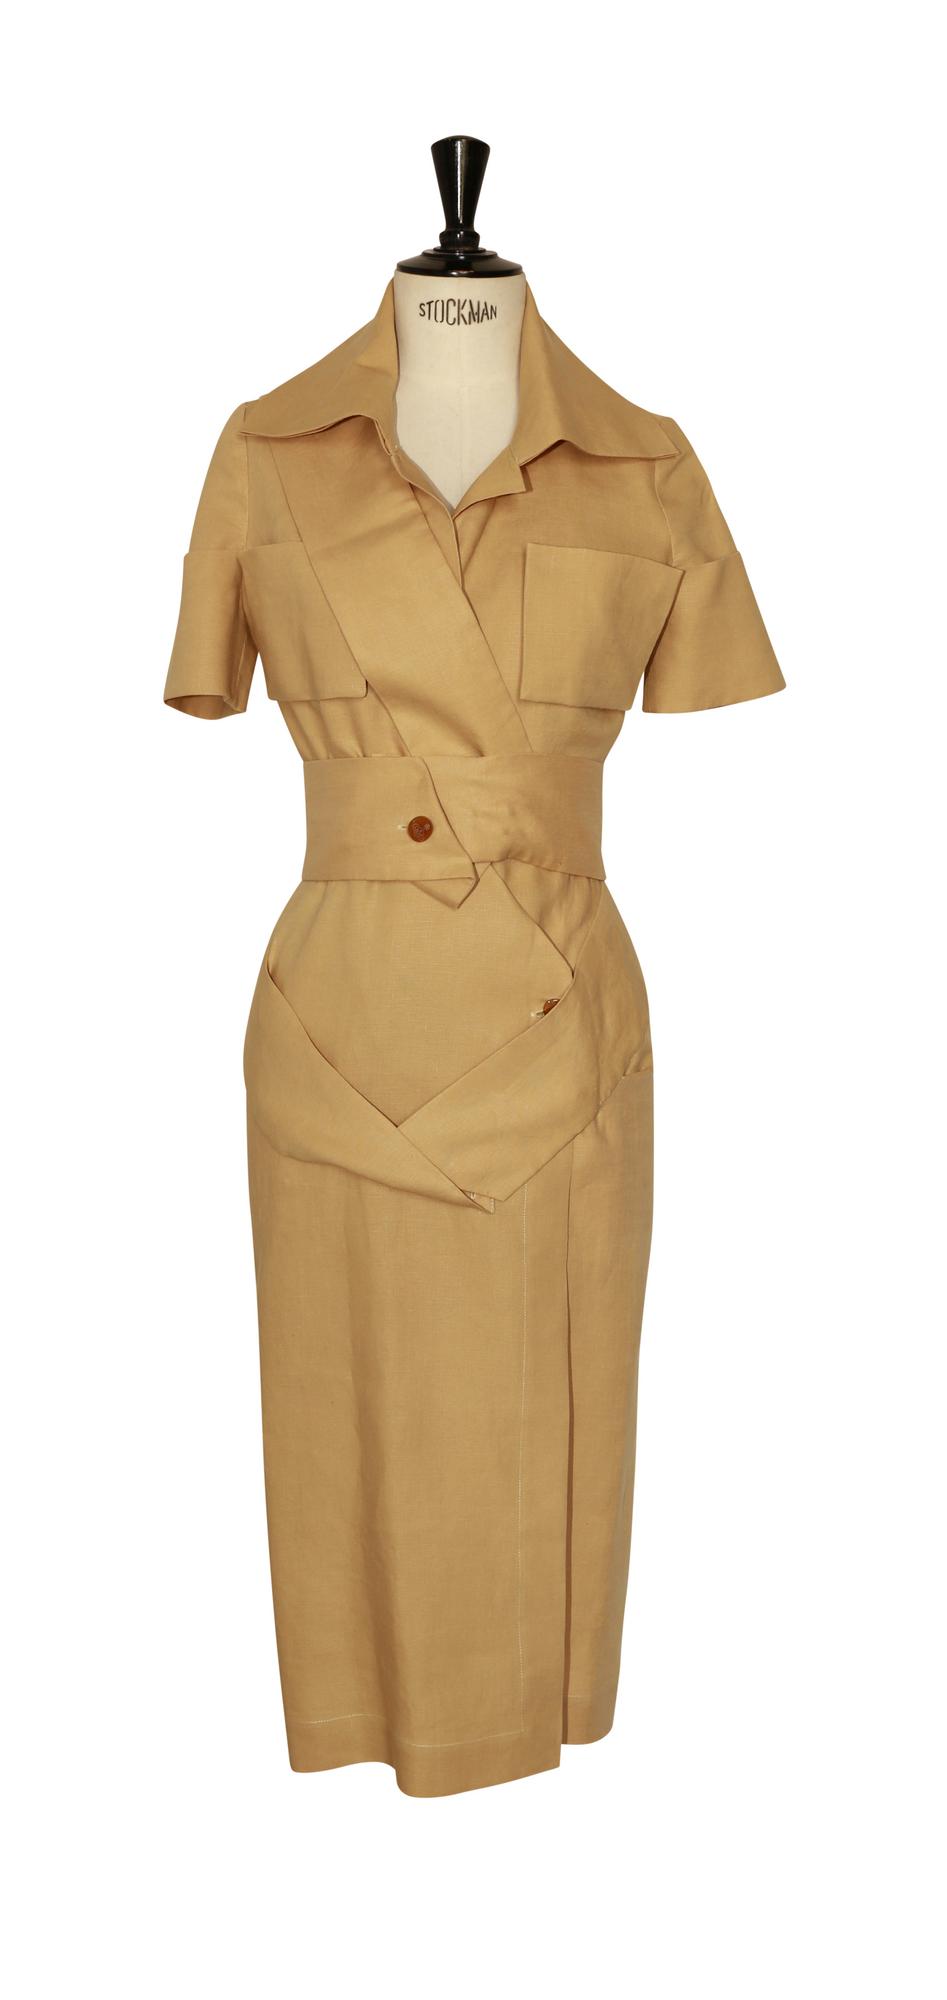 Vivienne Westwood SAFARI DRESS Description: Short sleeved safari style dress...